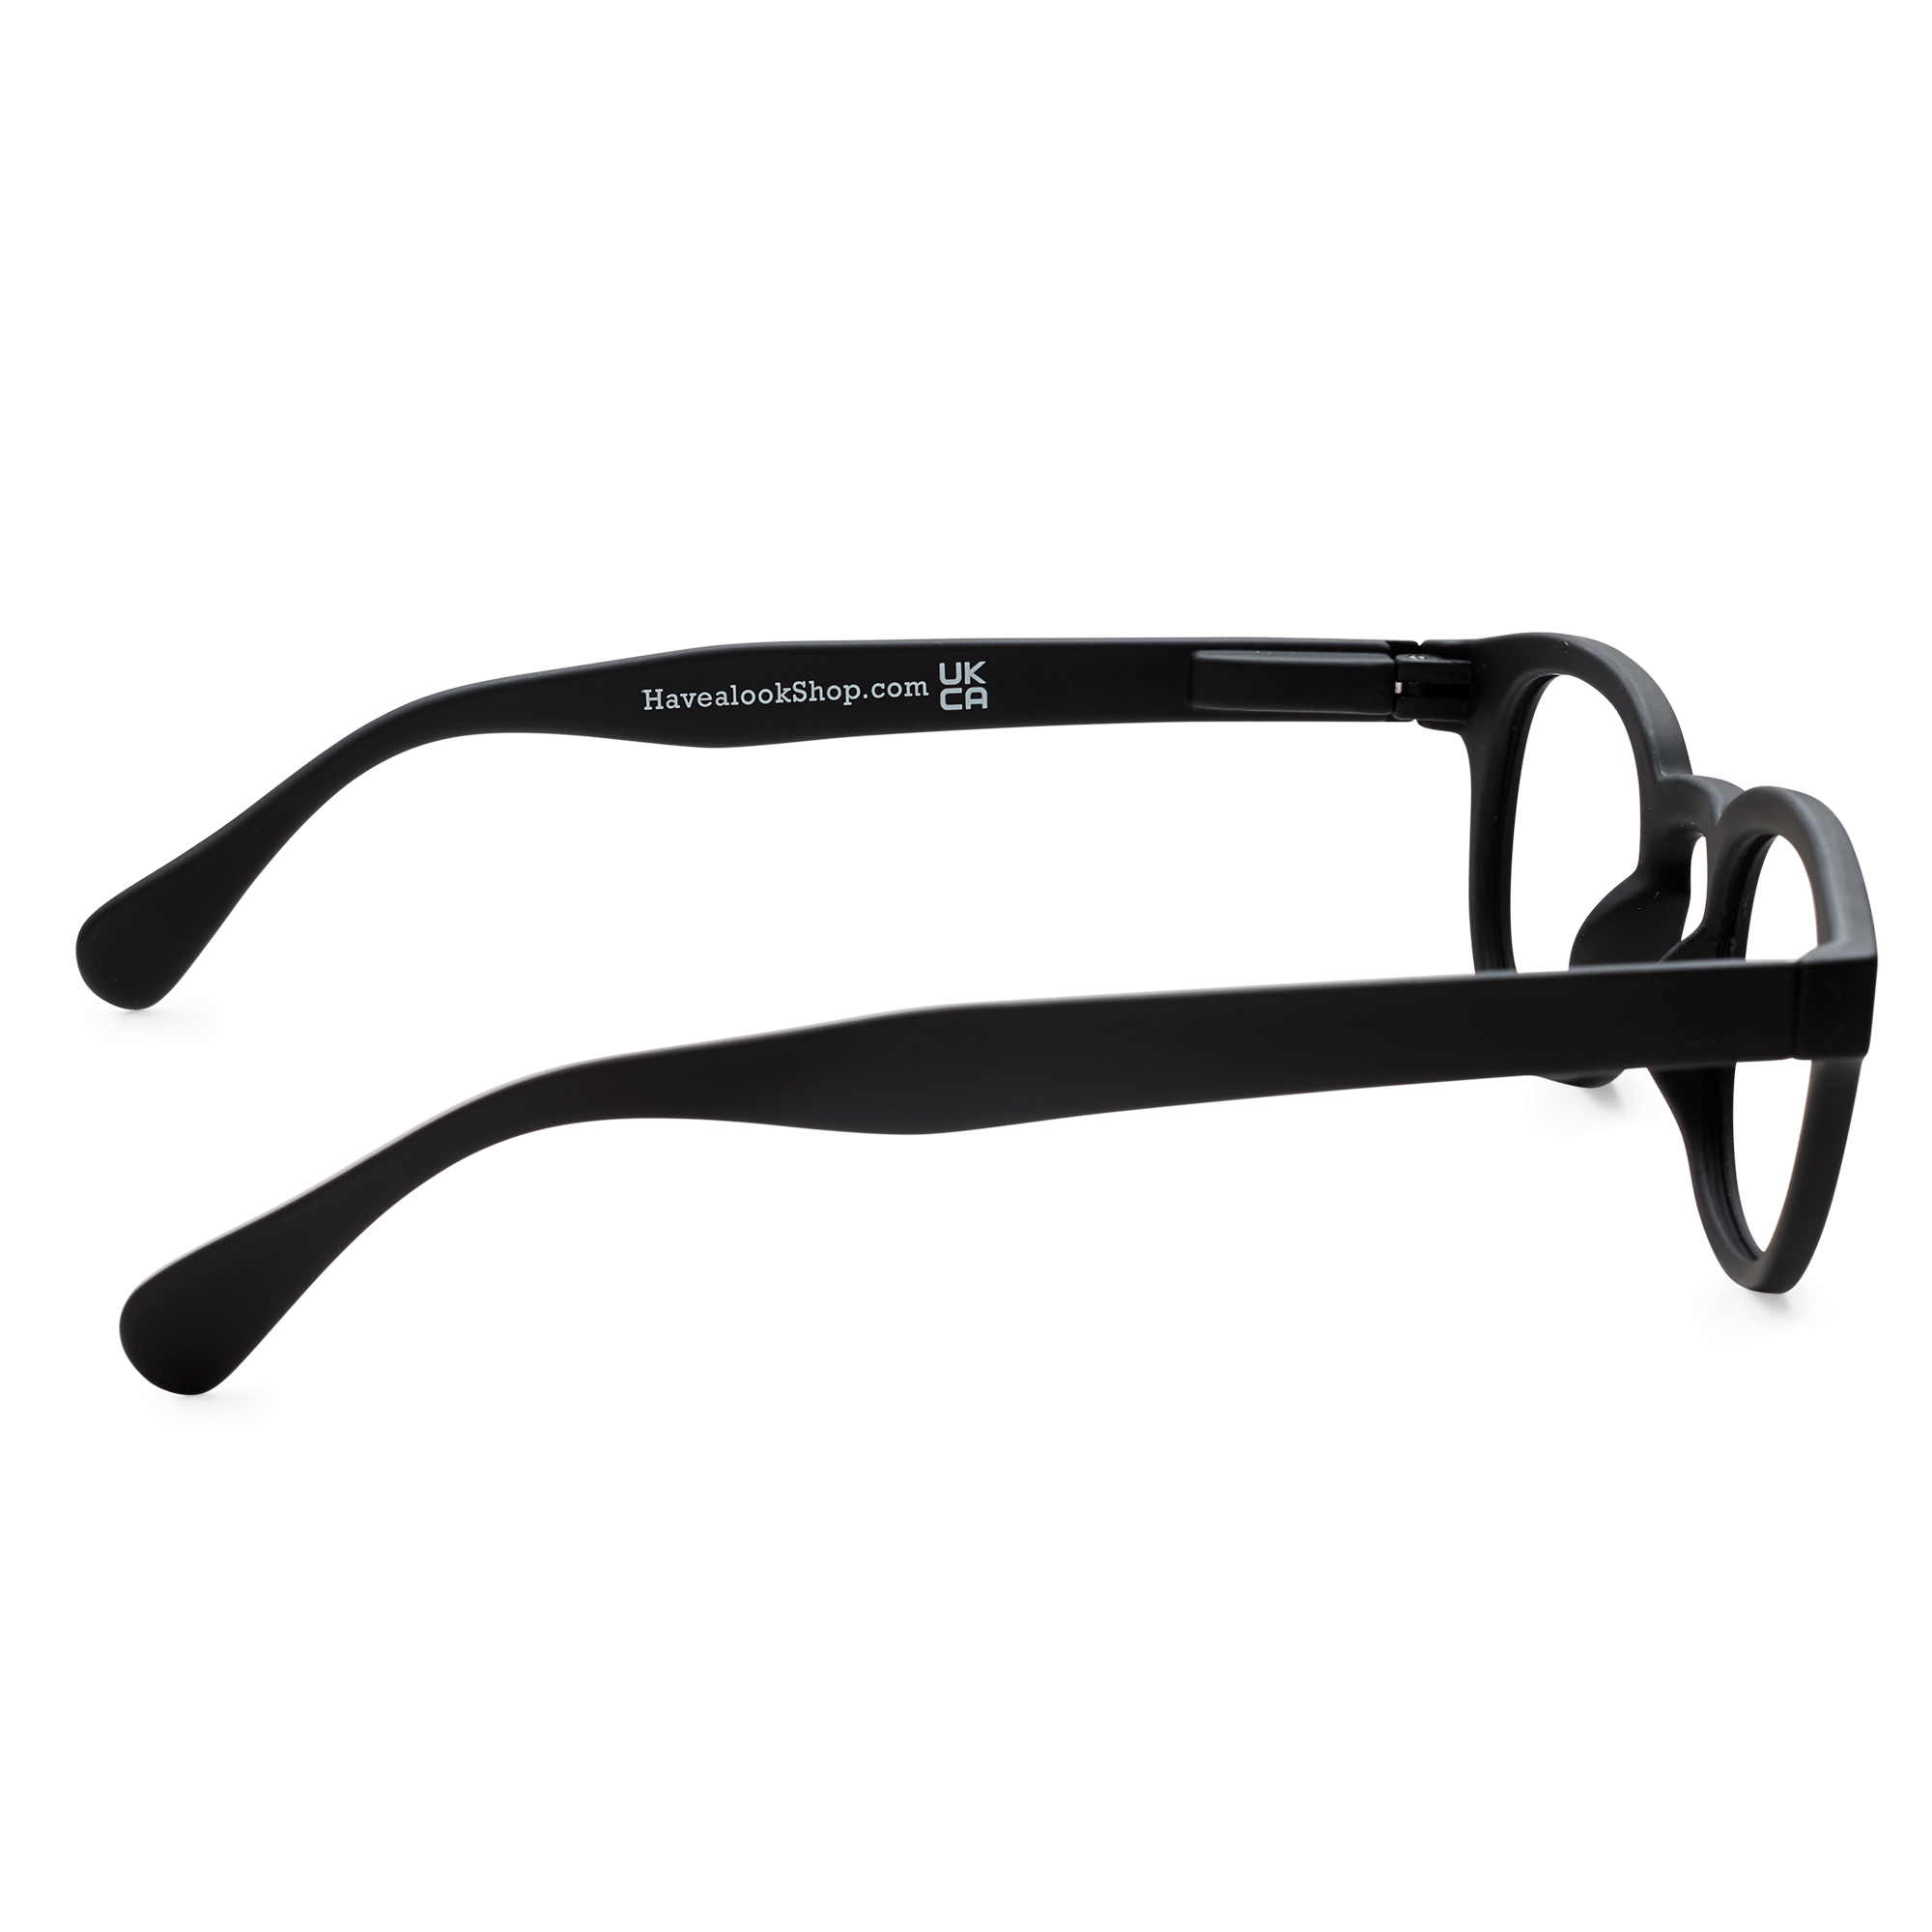 Minusbriller Type C - black